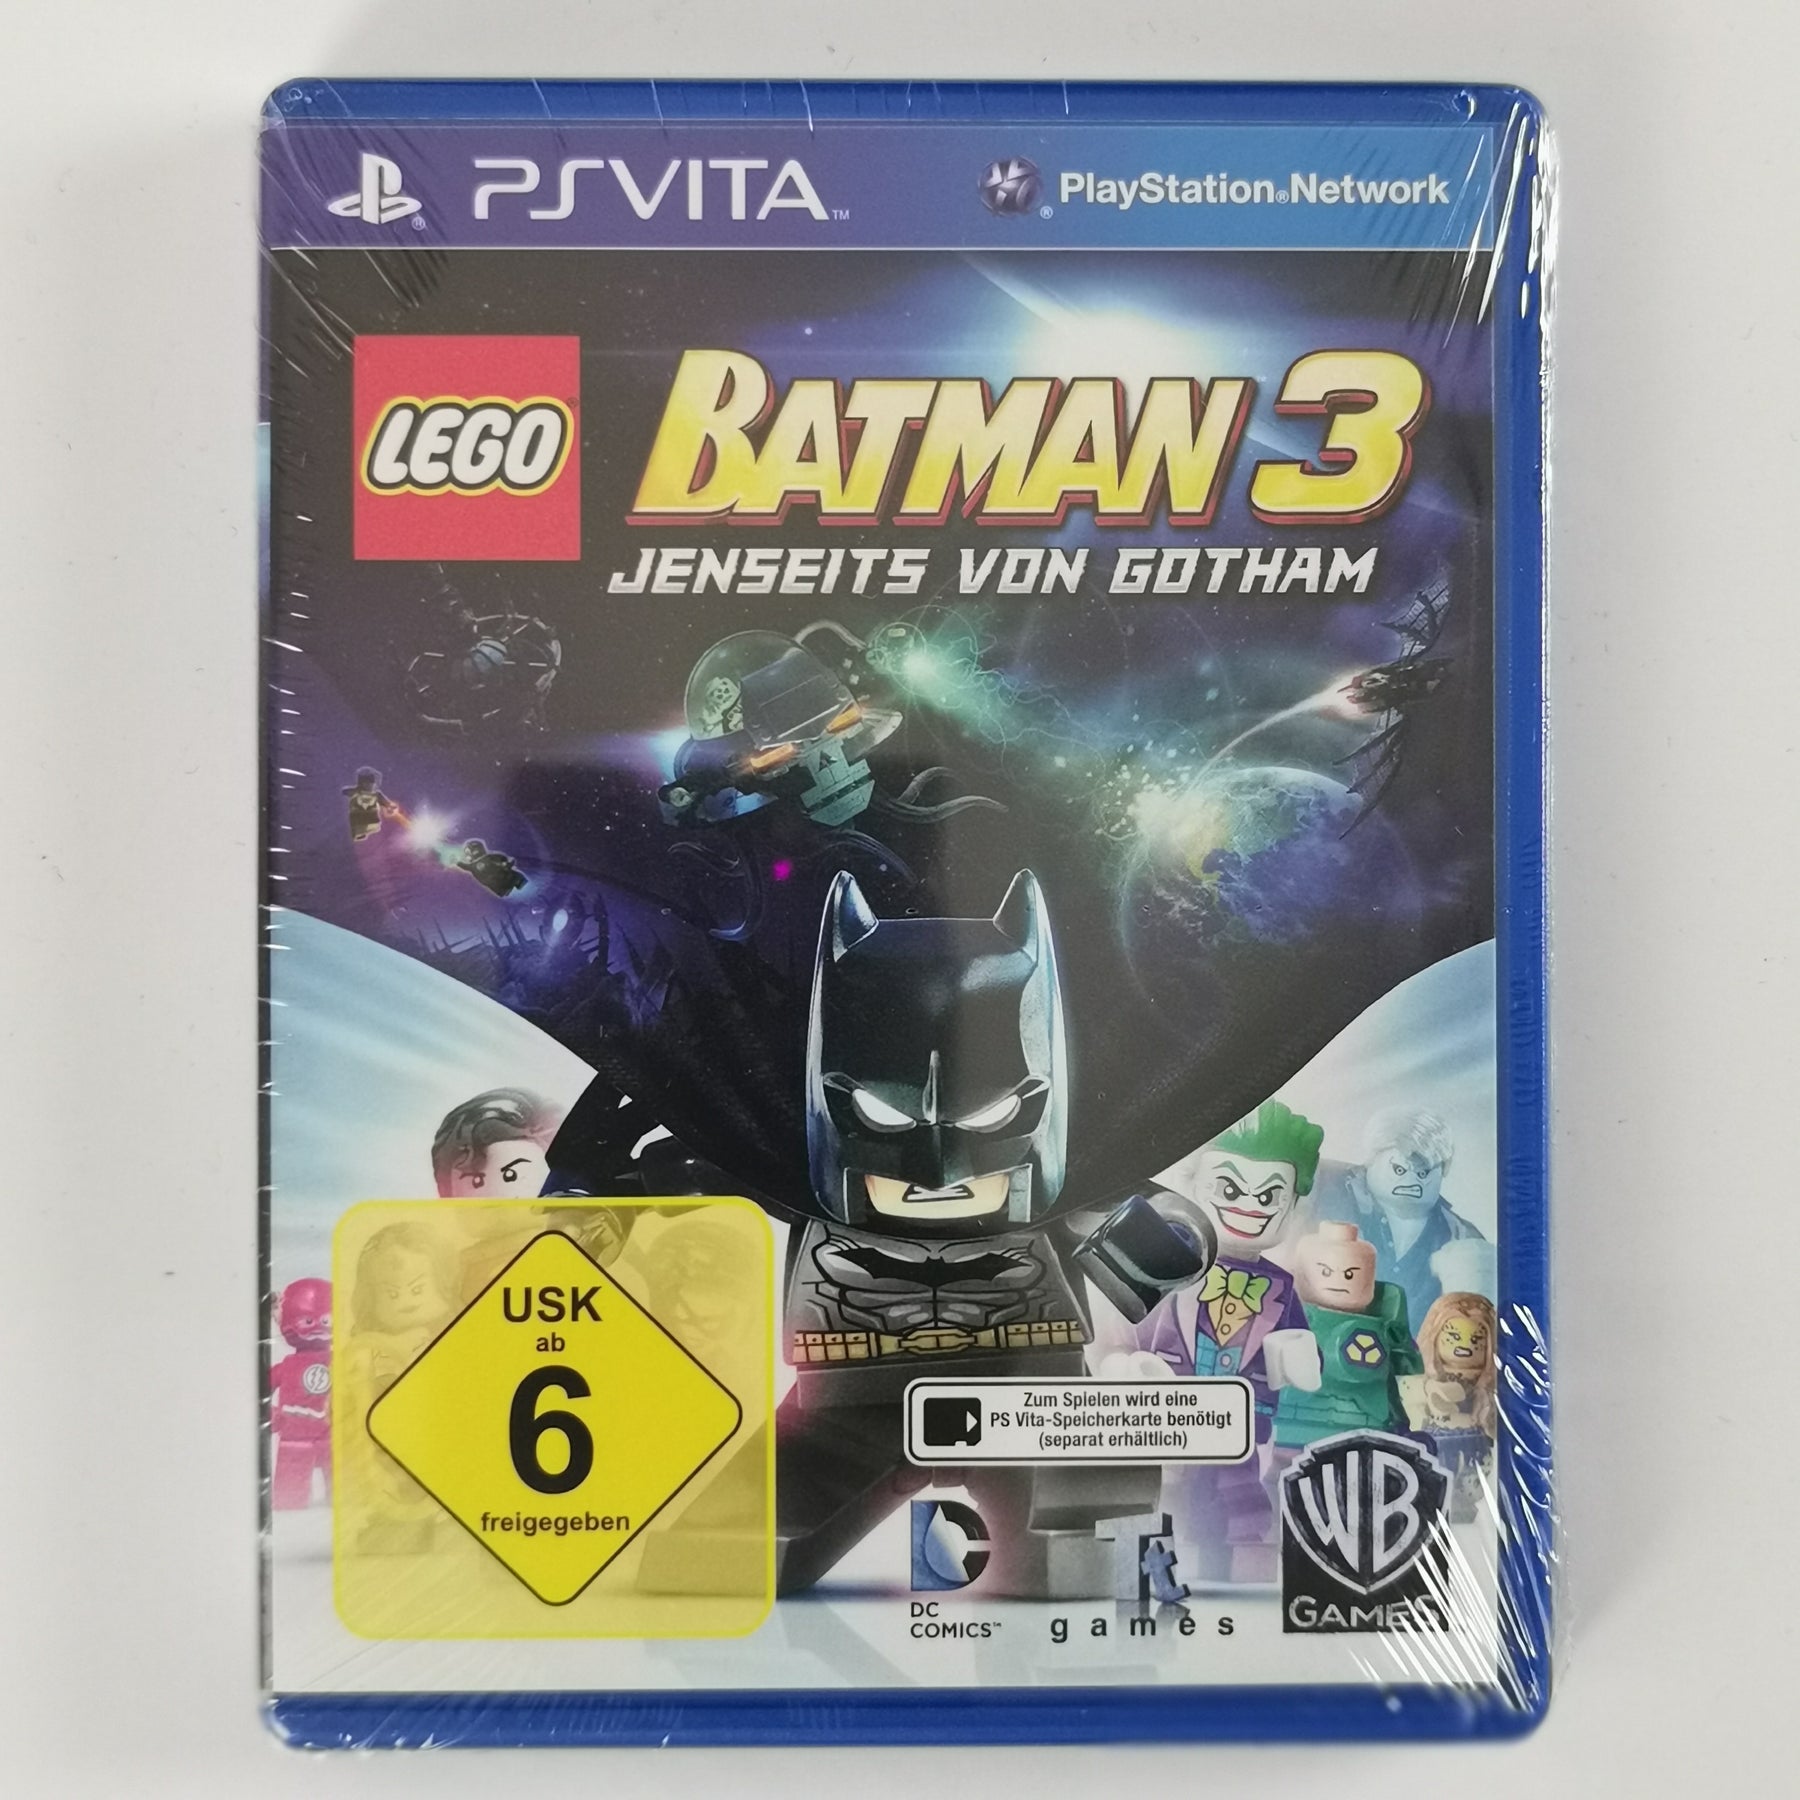 LEGO Batman 3 Jenseits von Gotham [PSV]